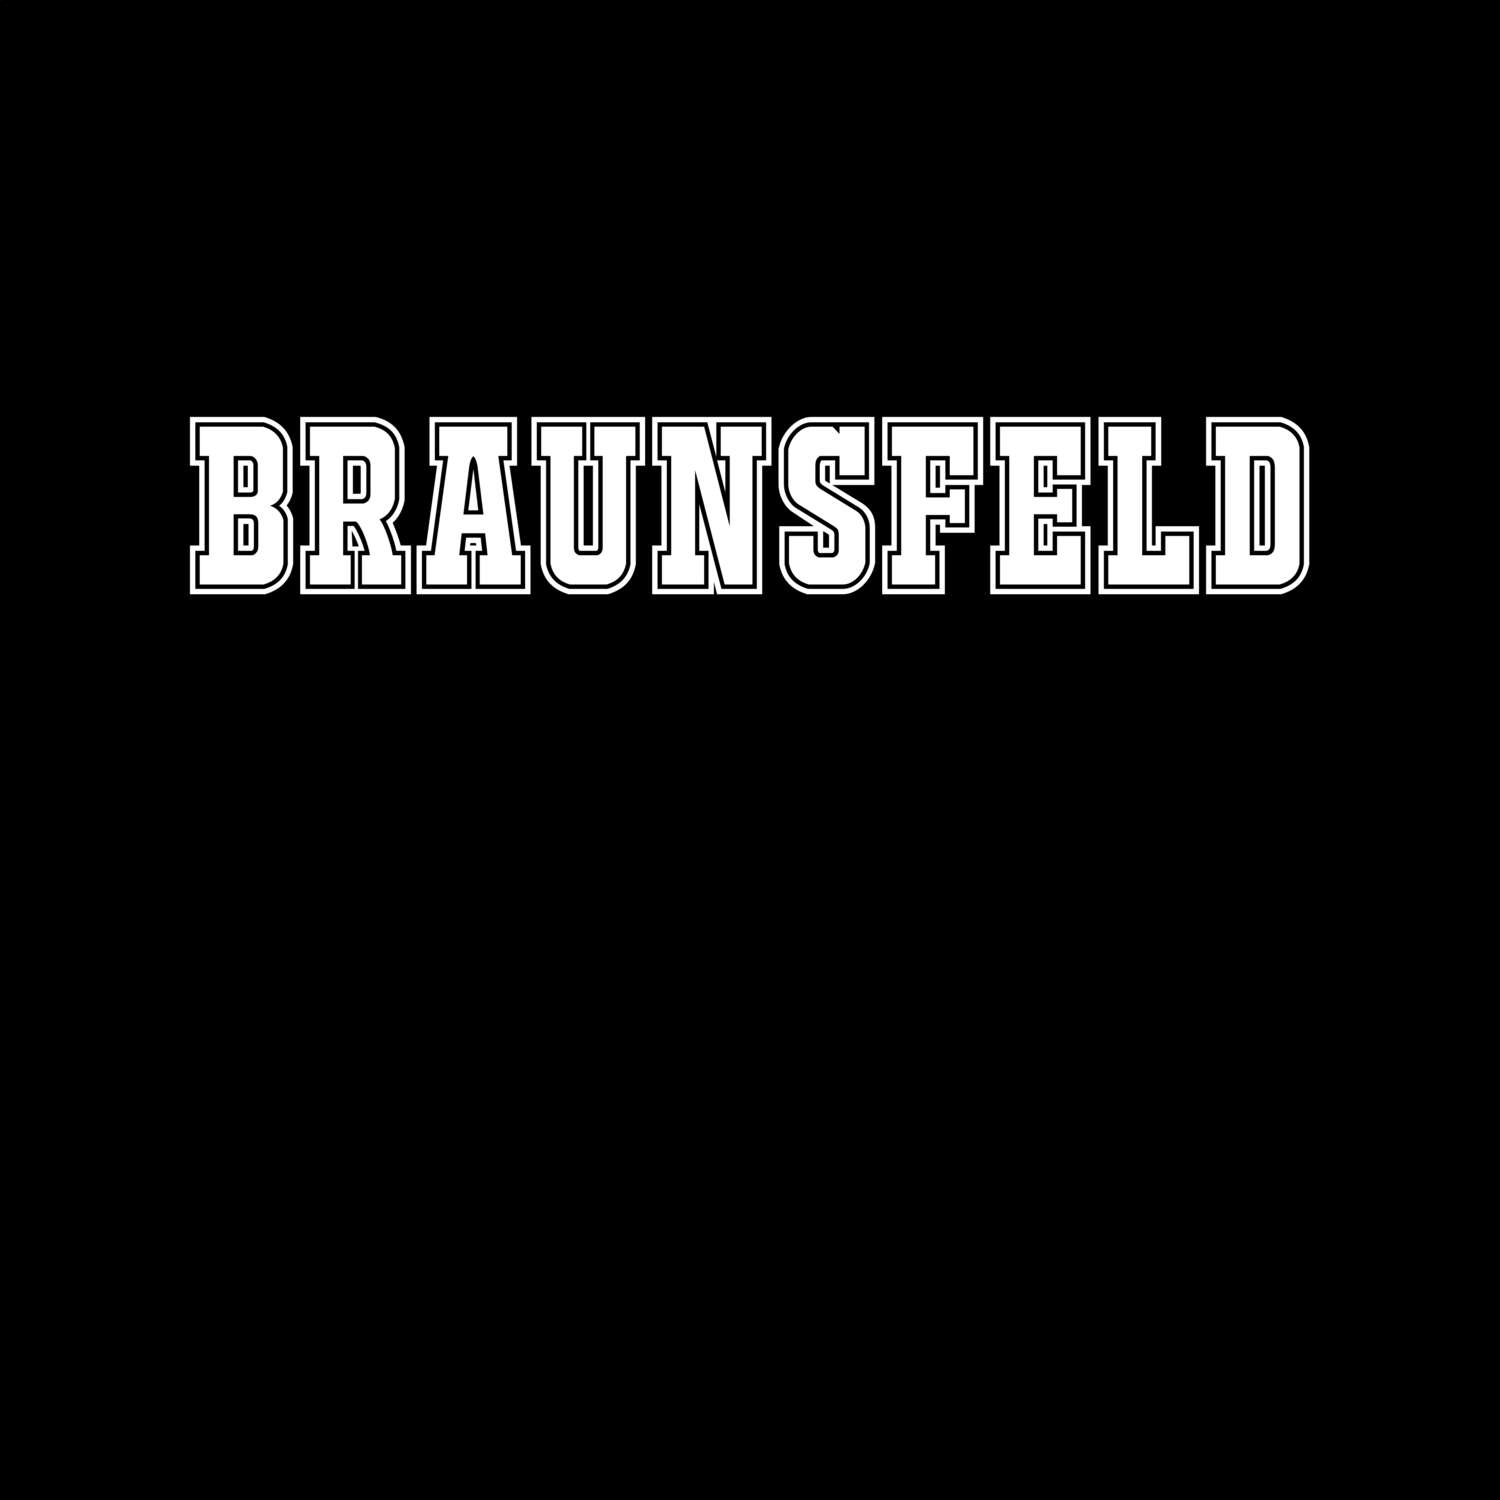 Braunsfeld T-Shirt »Classic«